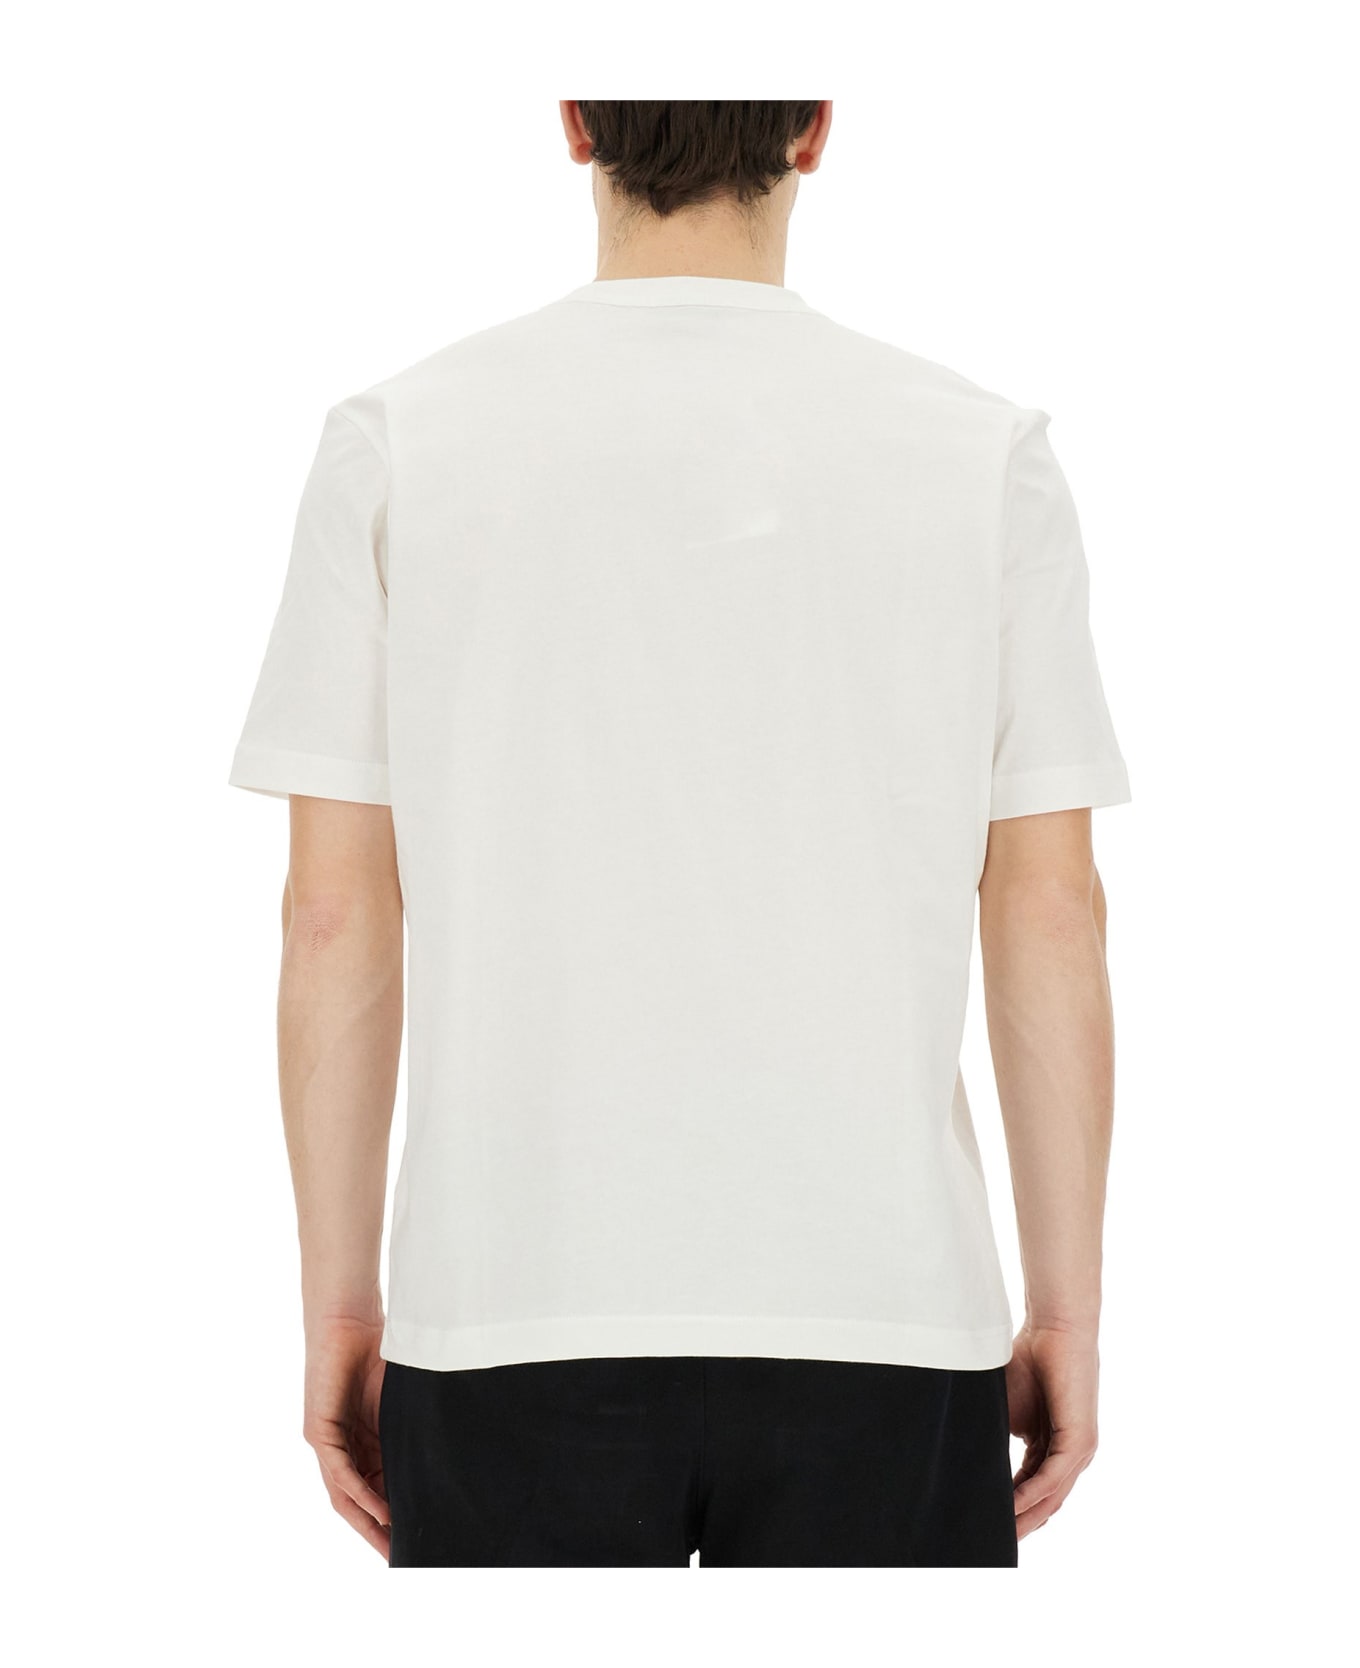 Paul Smith Circles T-shirt - White